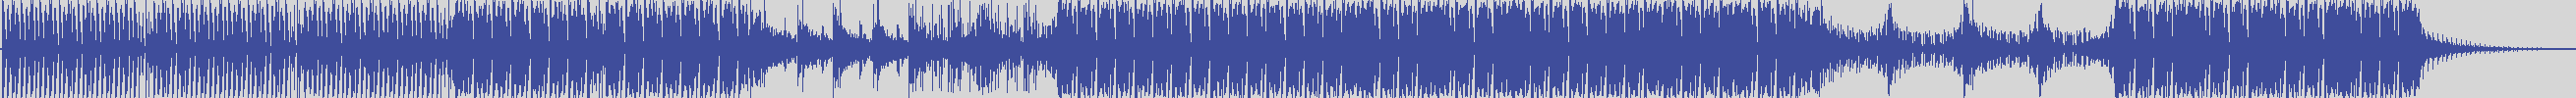 atomic_recordings [AR003] Amoeba - Piper [Night Dust Mix] audio wave form